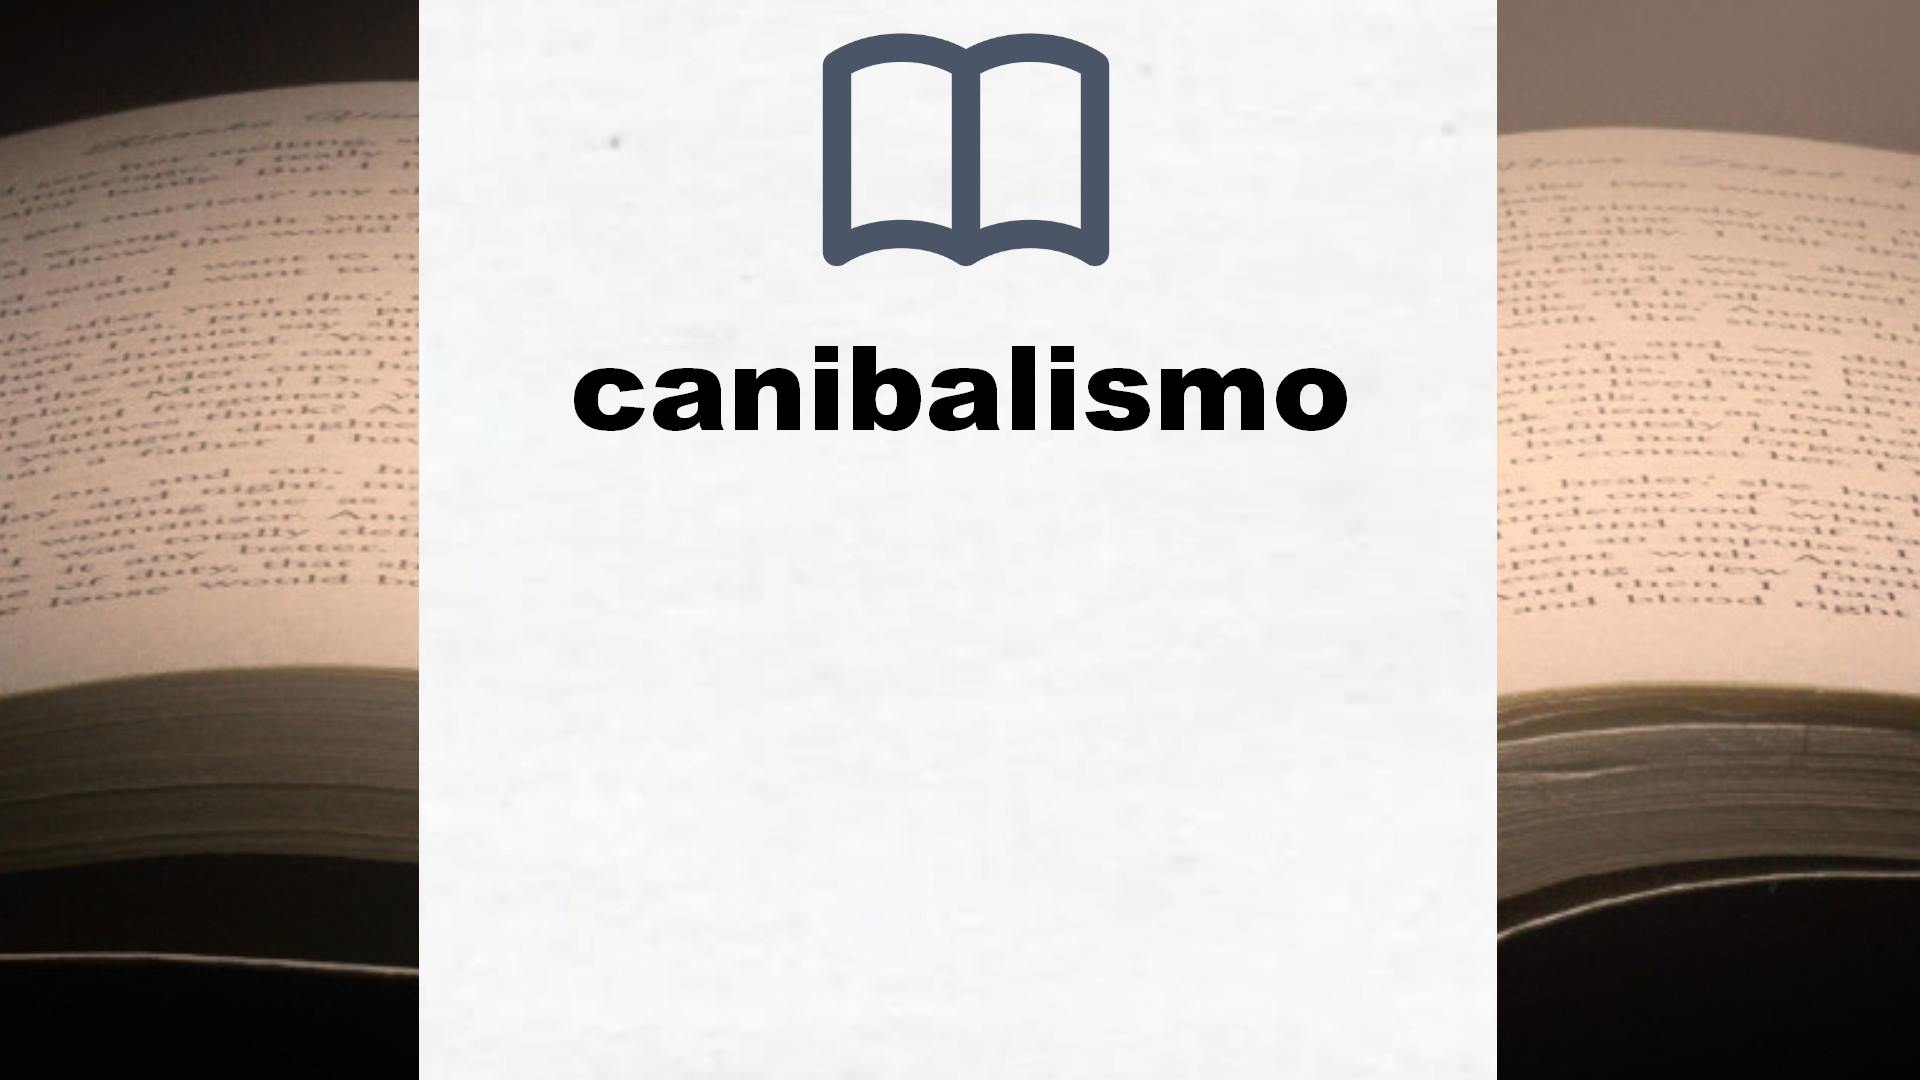 Libros sobre canibalismo